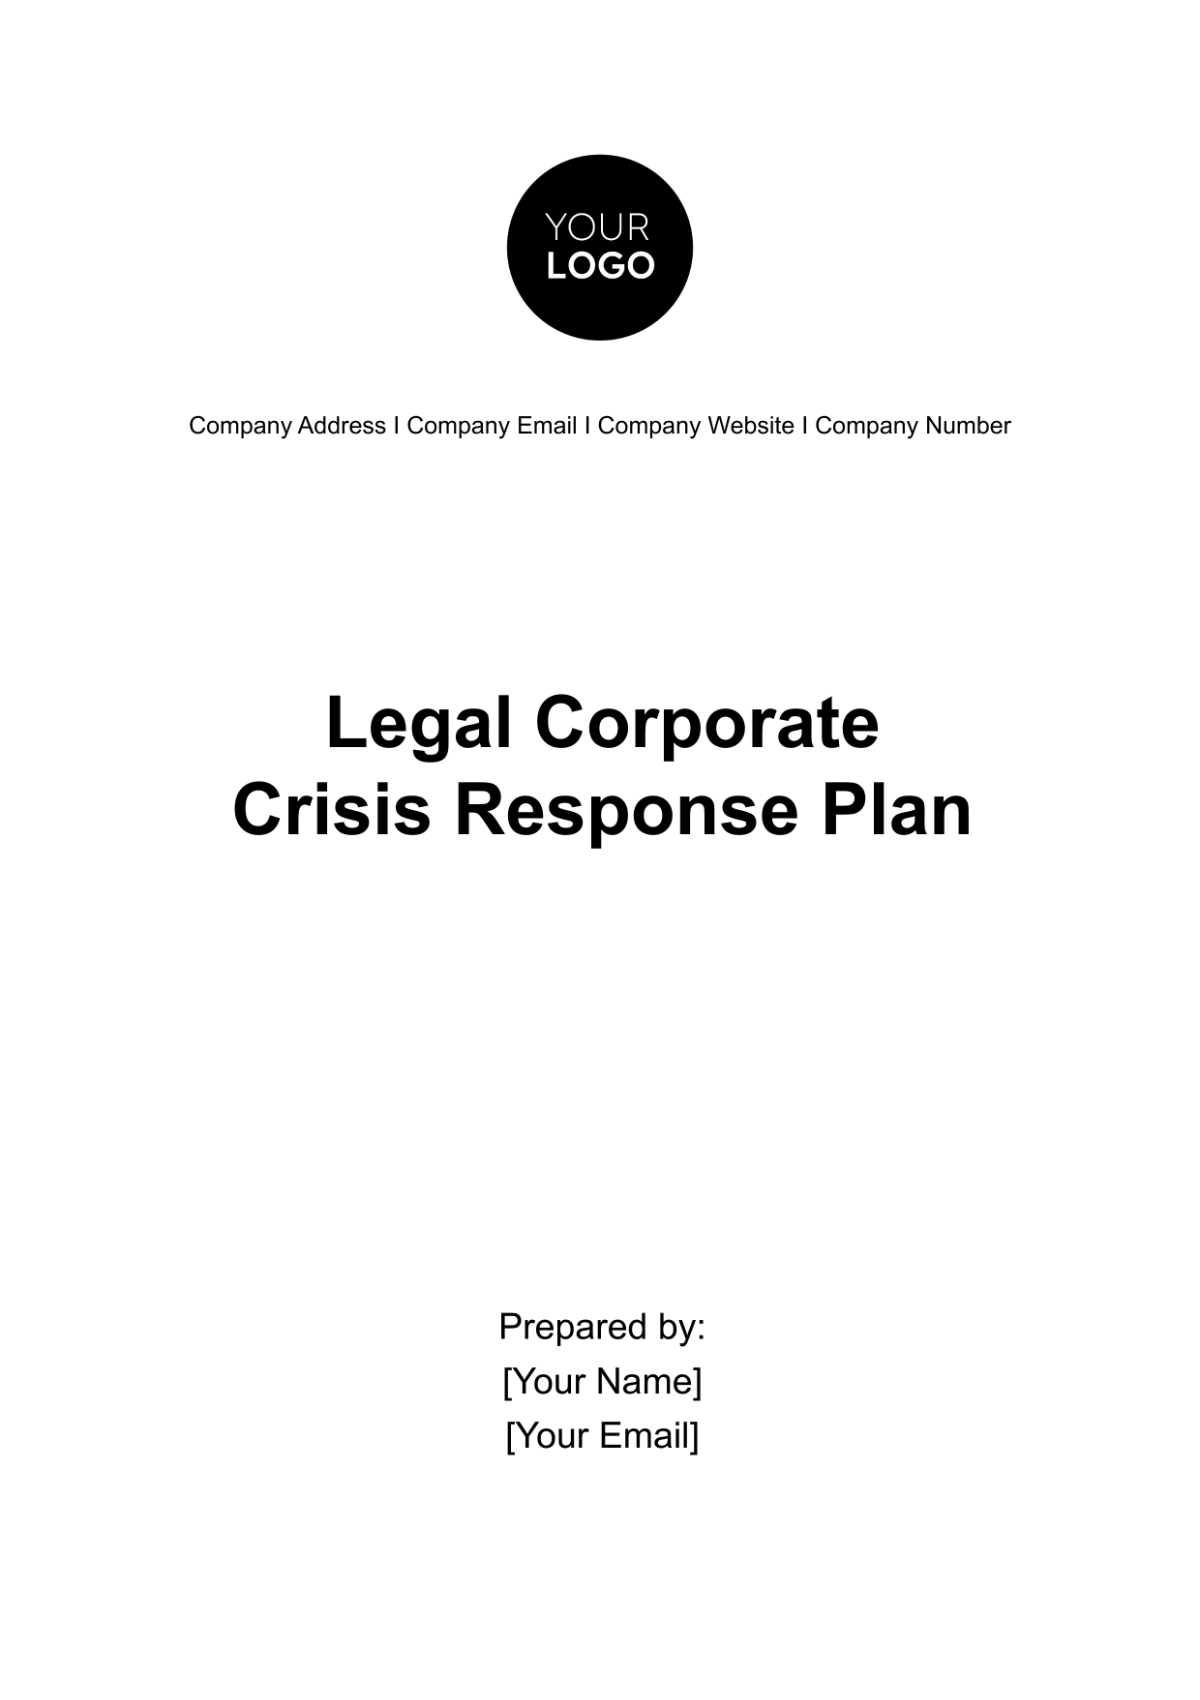 Free Legal Corporate Crisis Response Plan Template